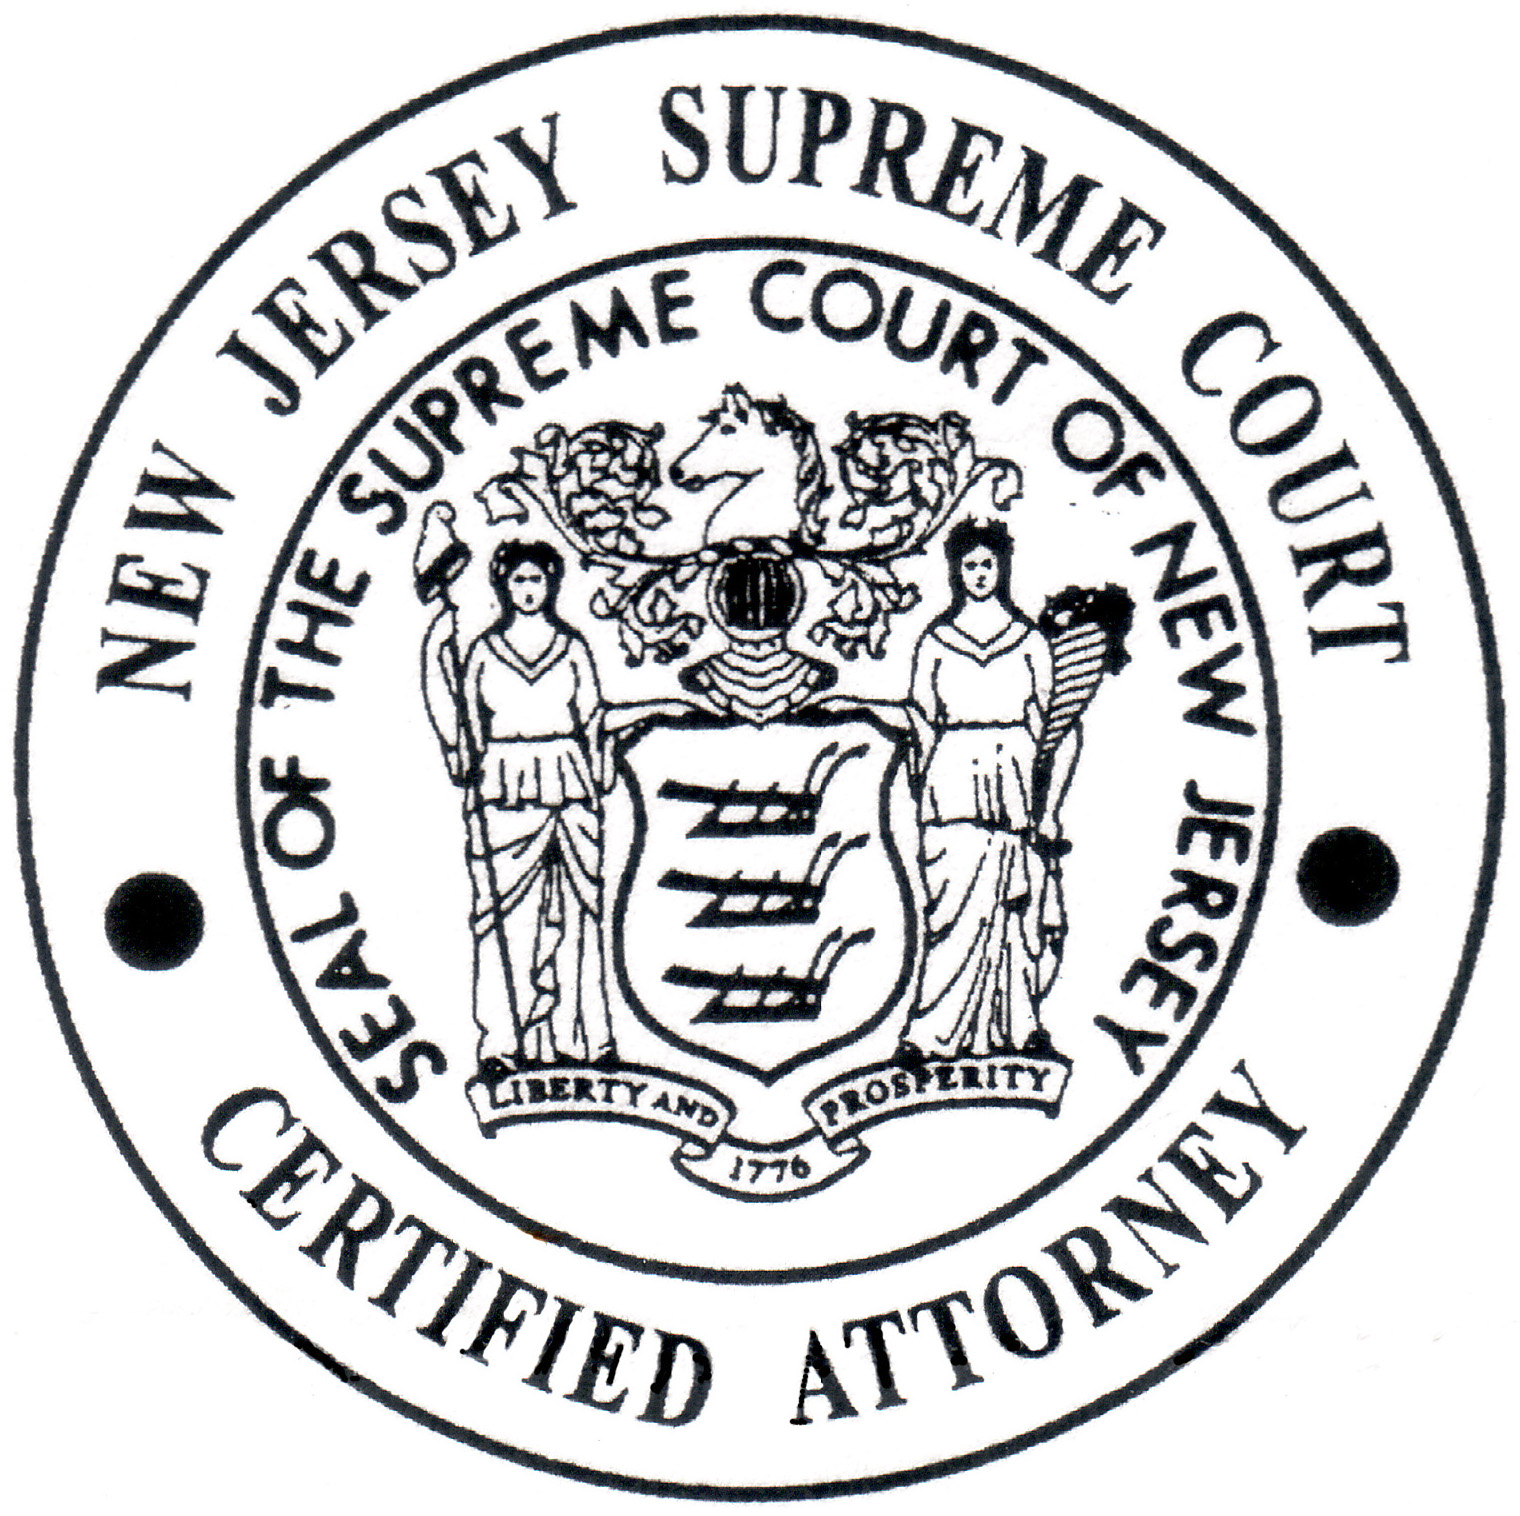 nj supreme court certified attorney